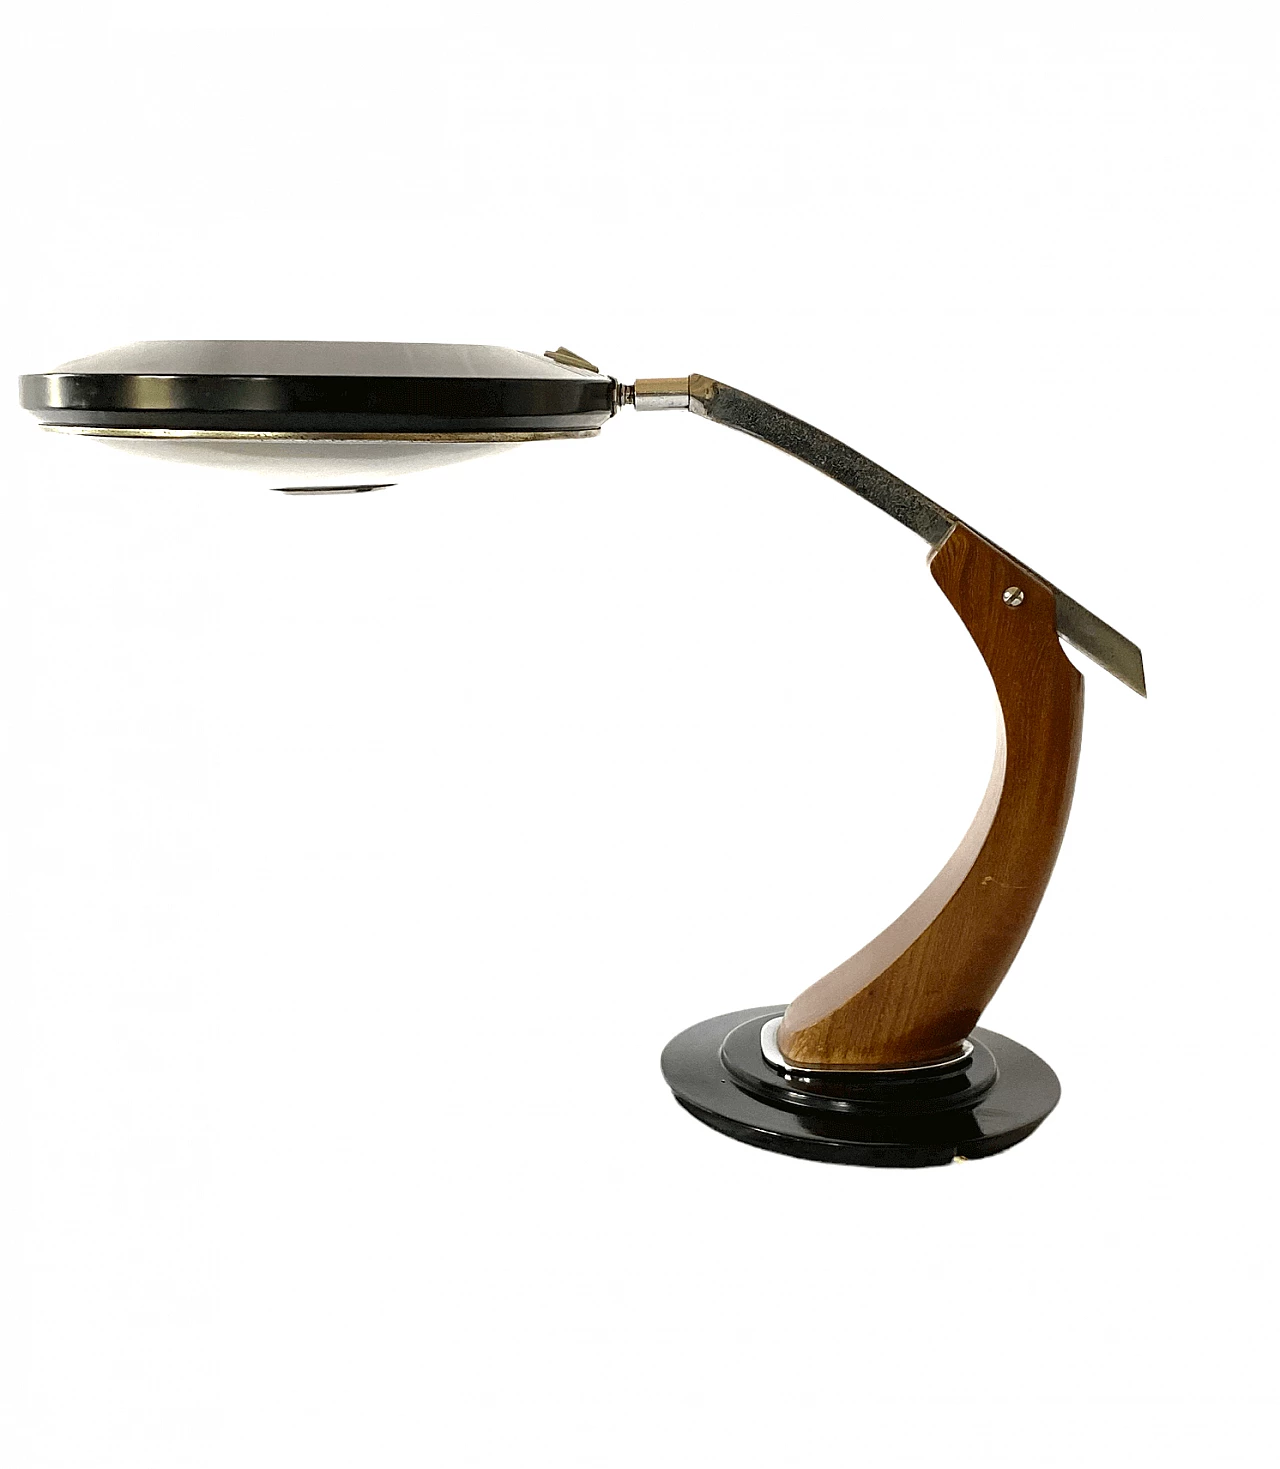 Presidente table lamp by Luis Perez de la Oliva for Fase, 1960s 1470844